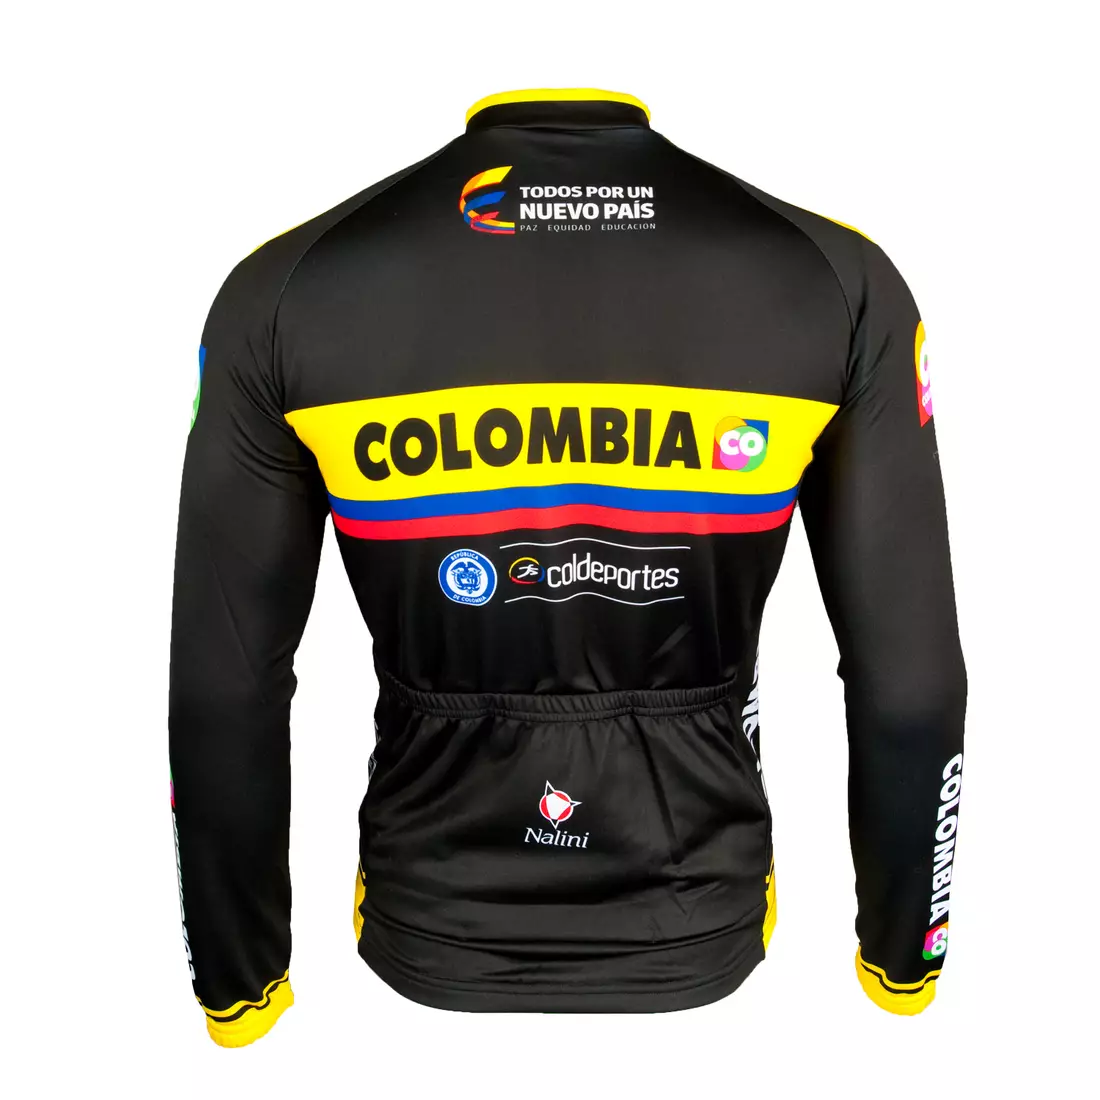 COLOMBIA 2015 kerékpáros pulóver